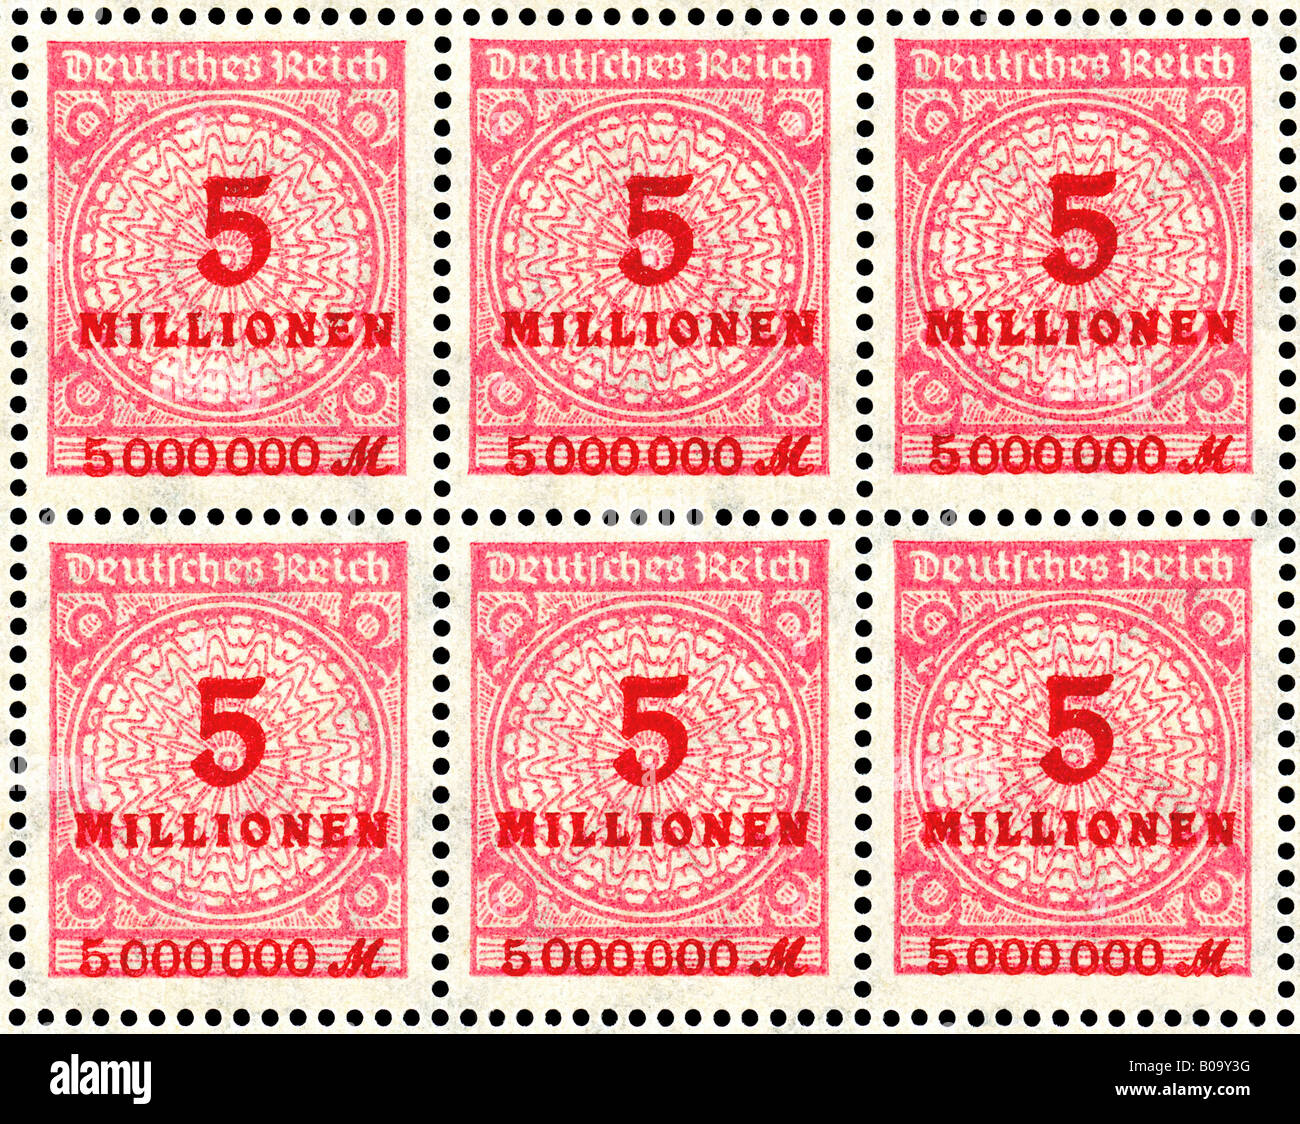 Unused German / Germany 1923 hyper-inflation period 5 Millionen stamp block  Stock Photo - Alamy